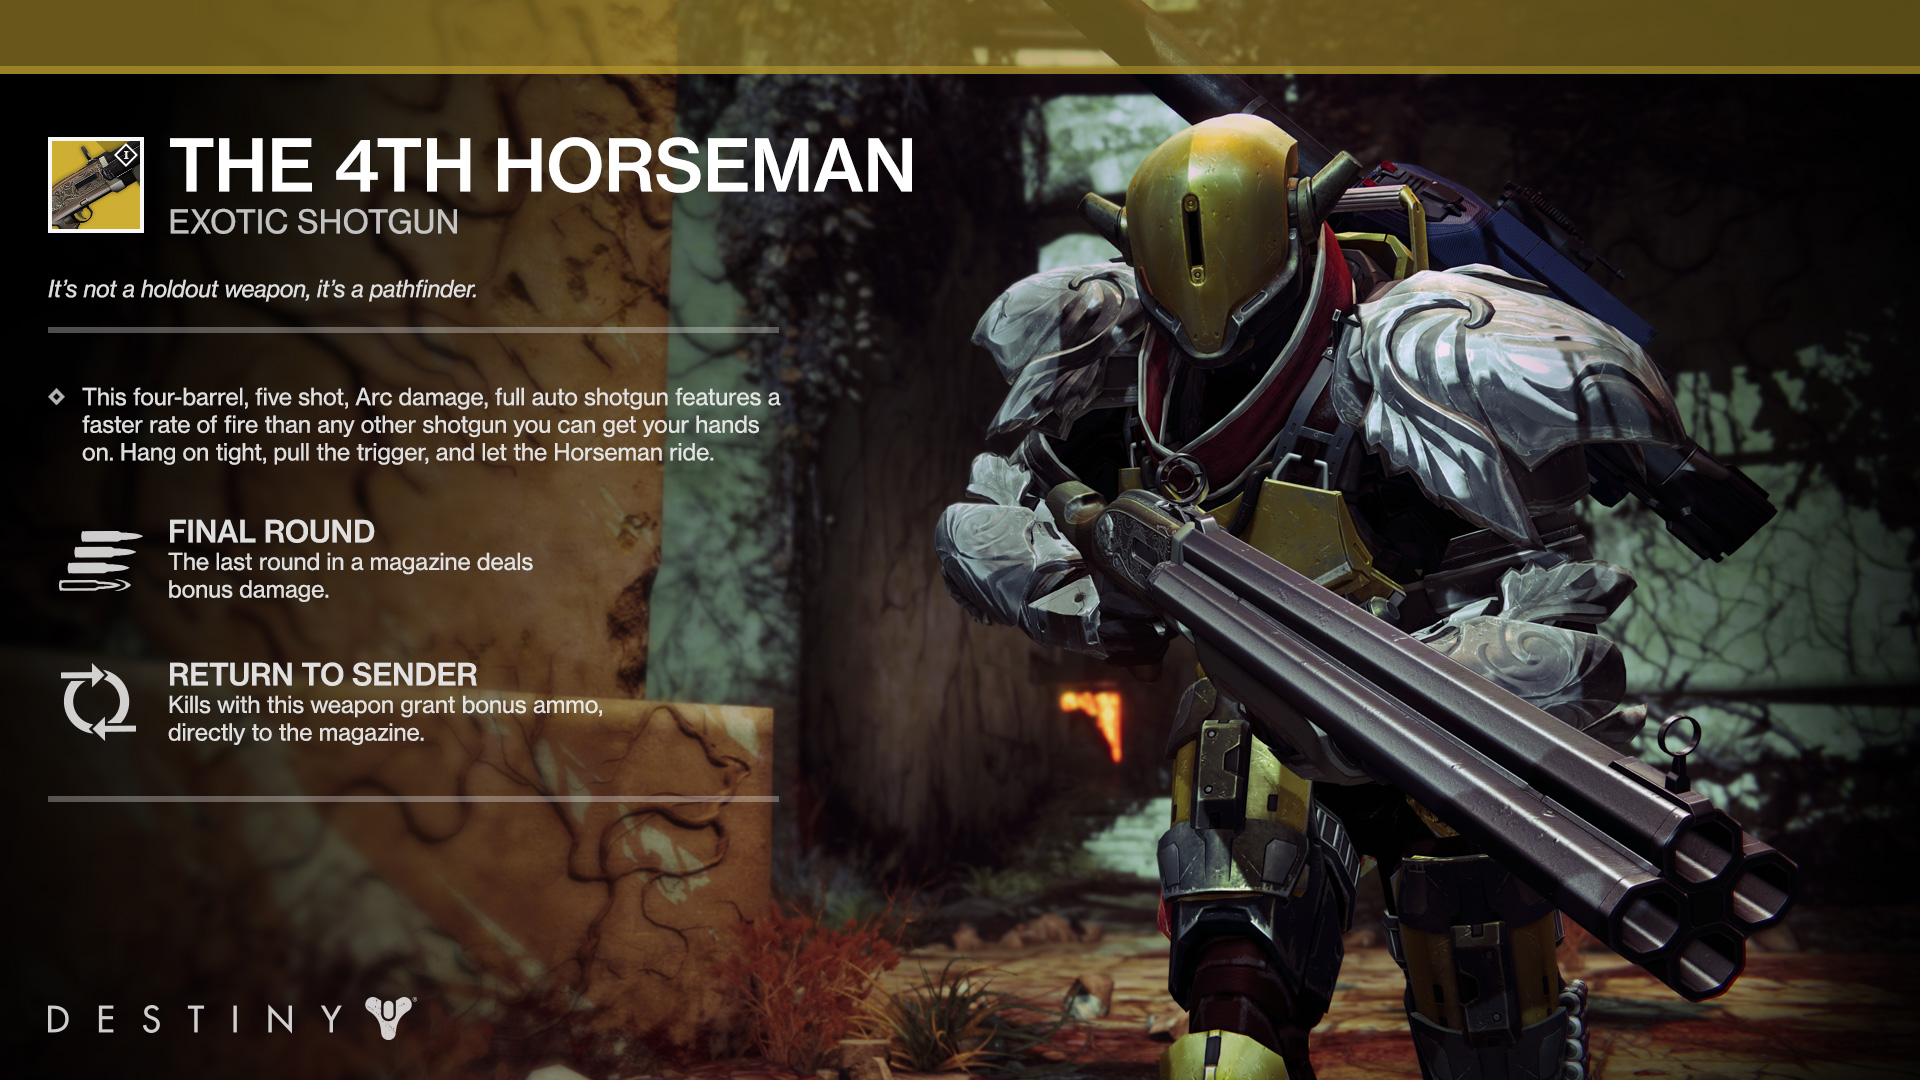 Destiny: The 4th Horseman